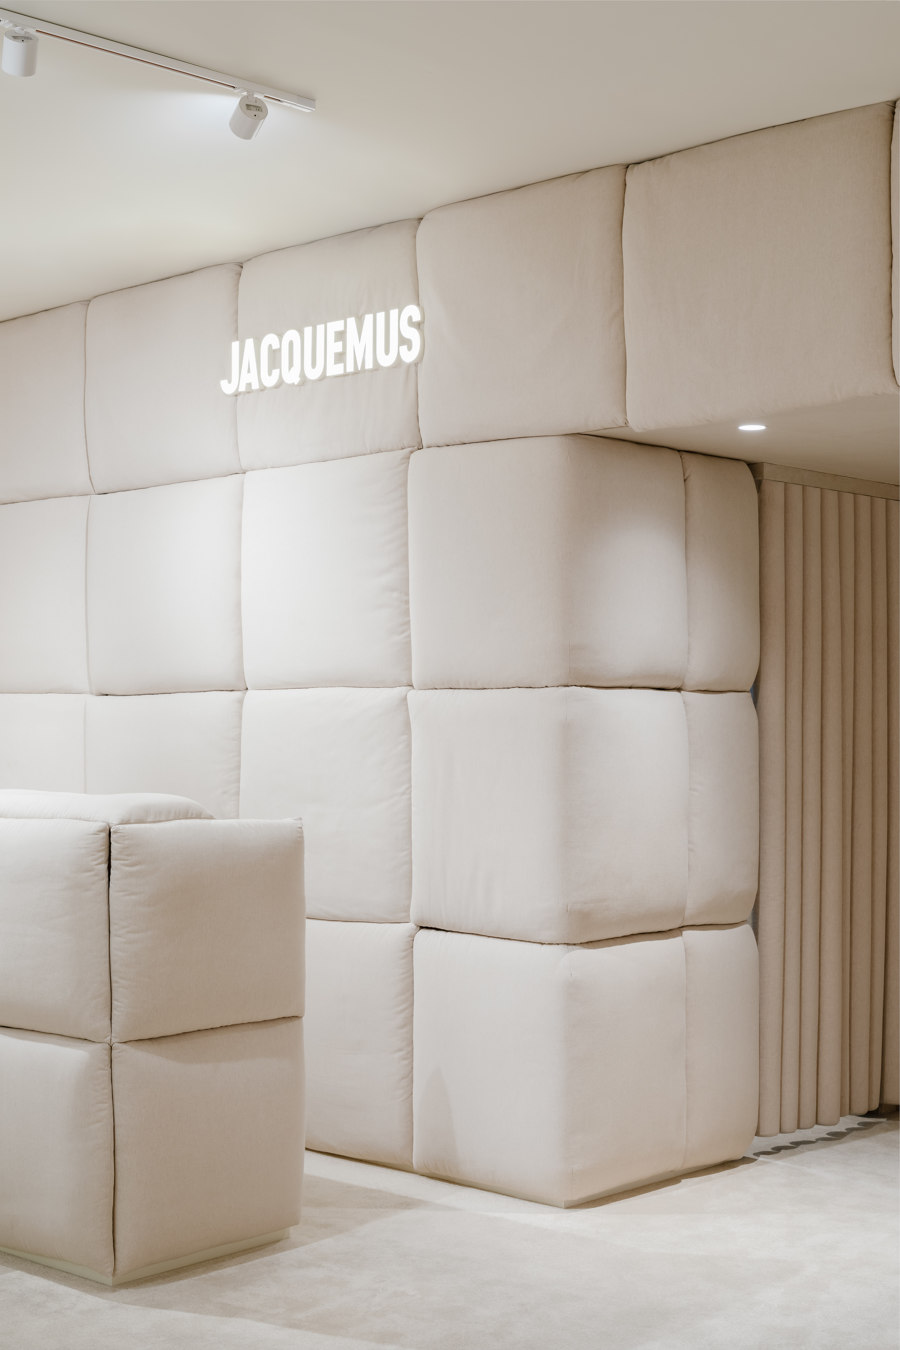 Jacquemus Store de AMO | Diseño de tiendas